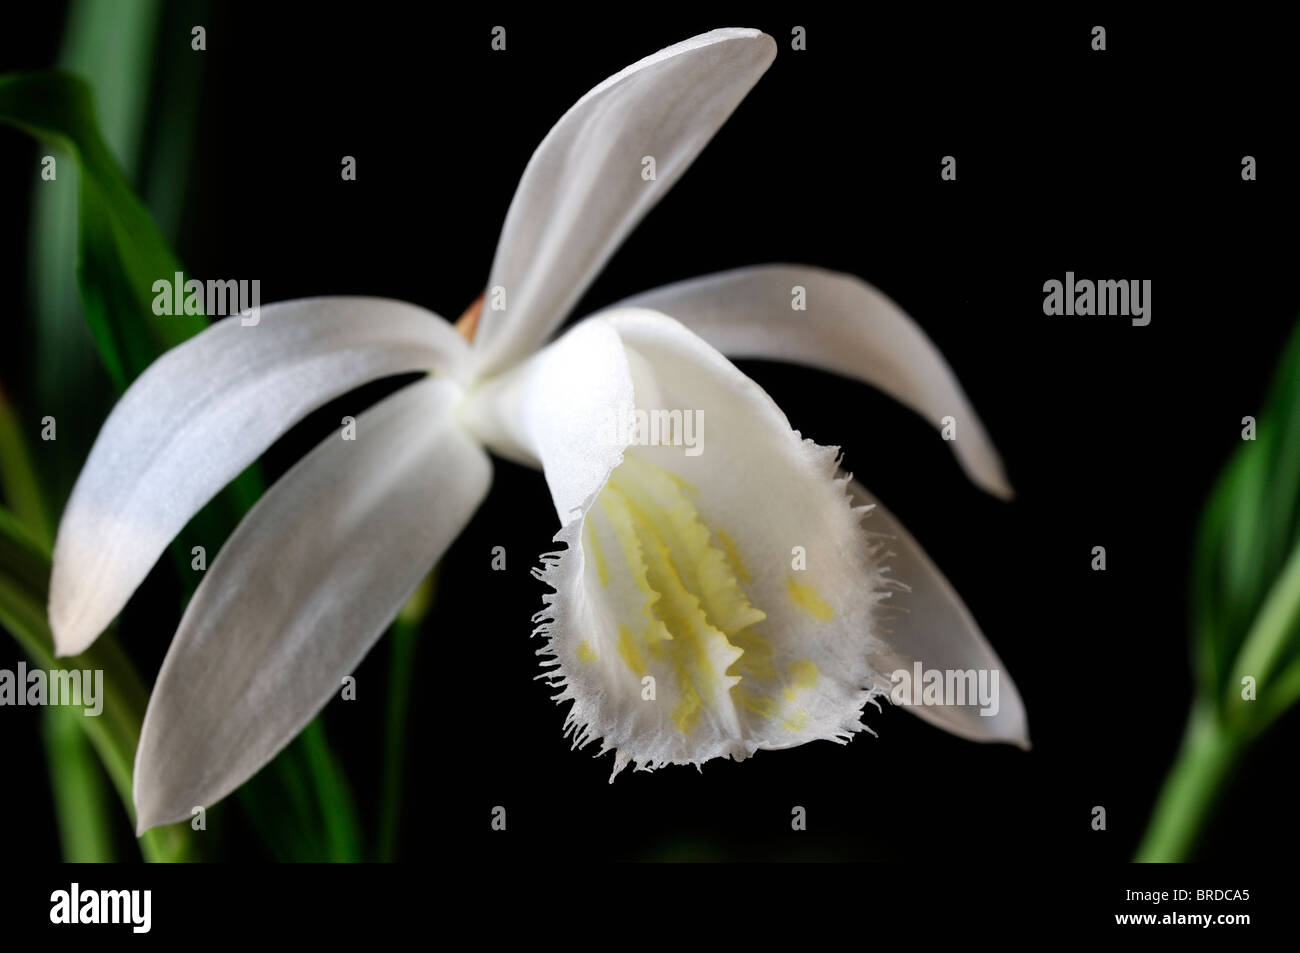 Pleione formosana snowcap white windowsill orchid flower plant set contrast contrasted black background Stock Photo